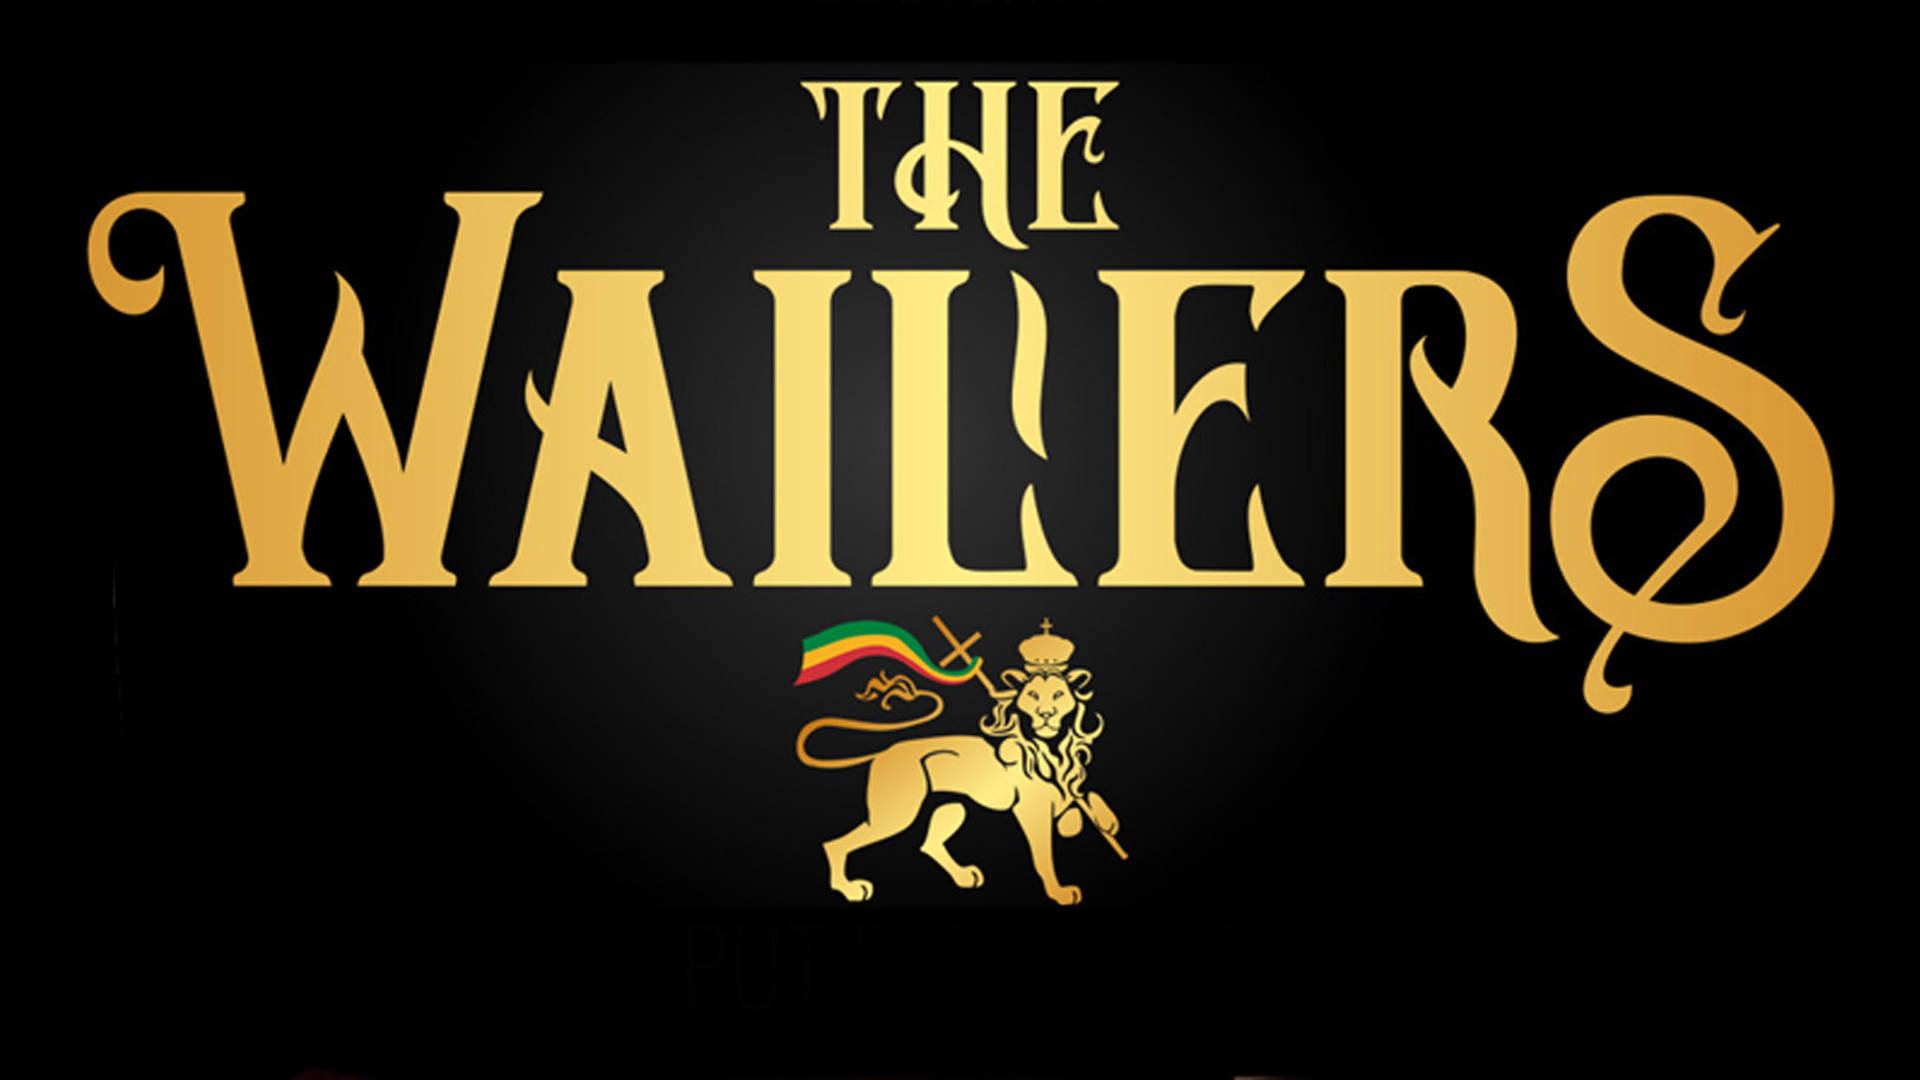 Bobmarley Och The Wailers Band Logotypen. Wallpaper